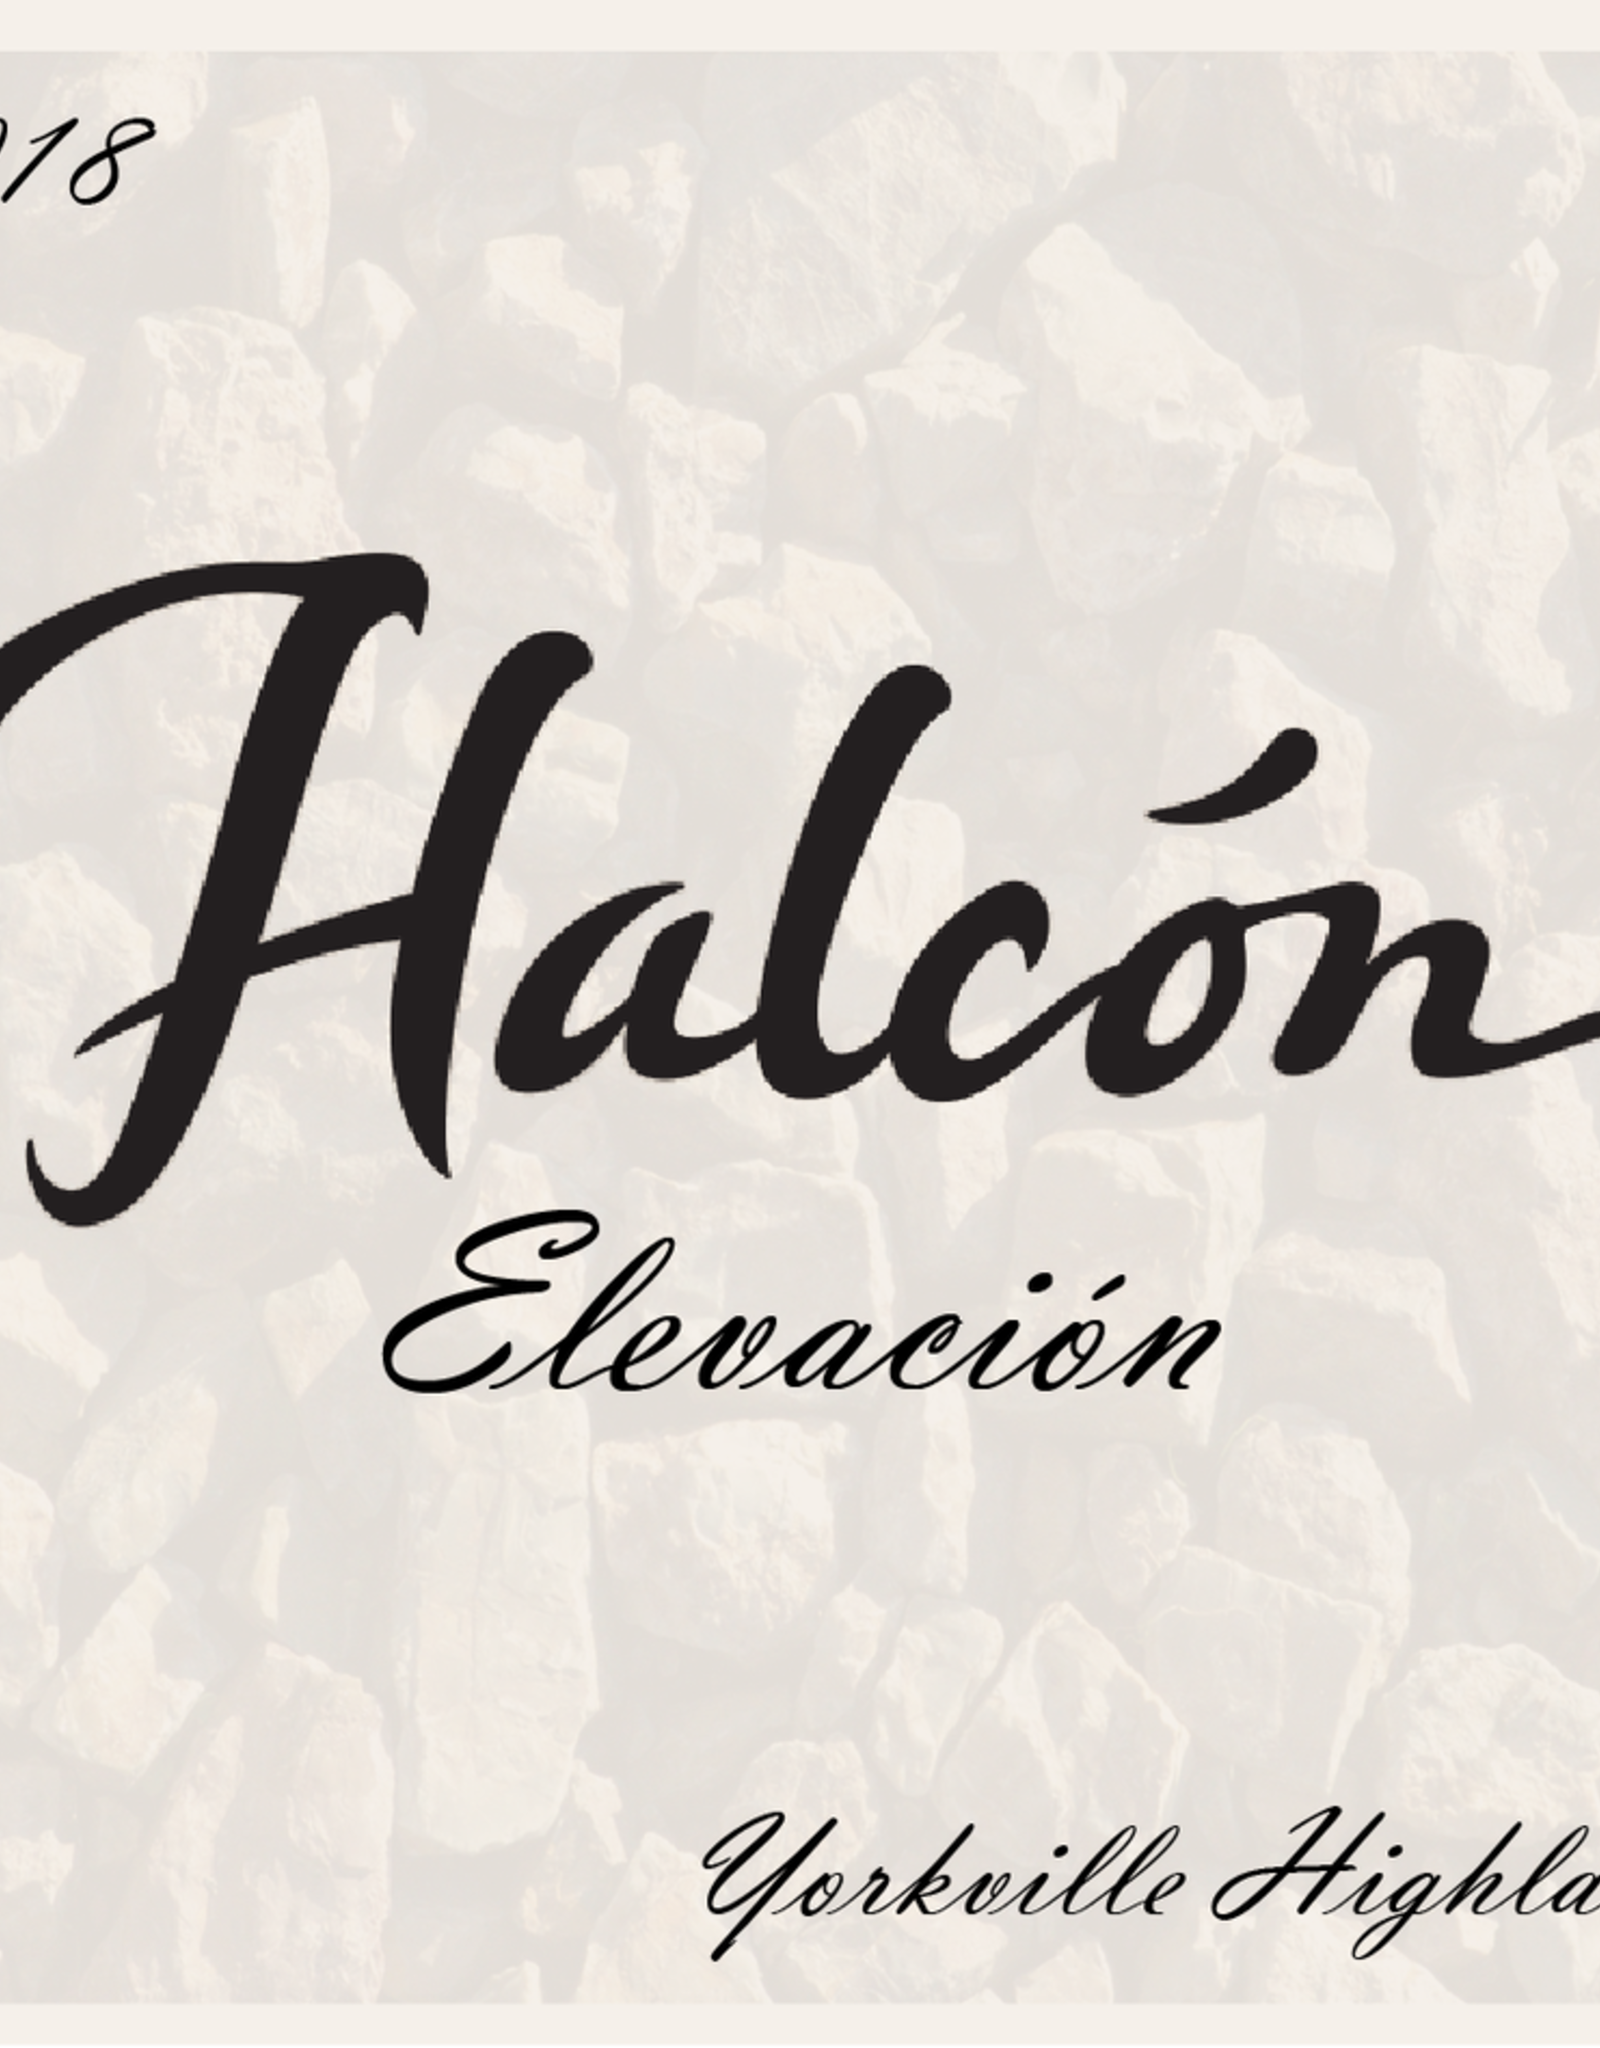 Halcon Halcon Vineyards Elevation Syrah, Yorkville Highlands 2018